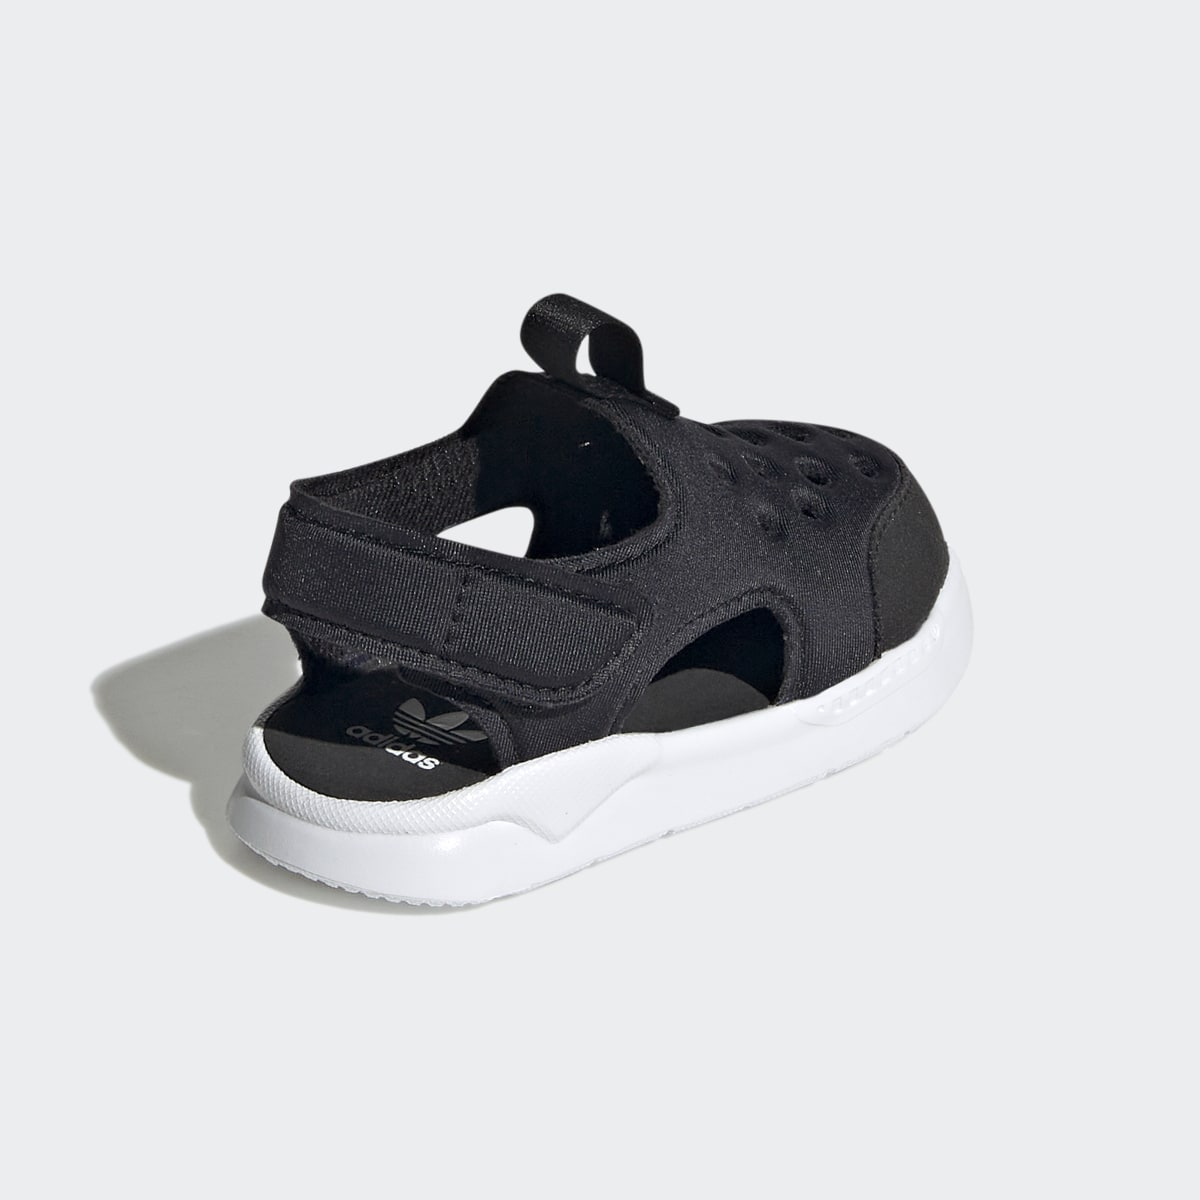 Adidas 360 2.0 Sandals. 6